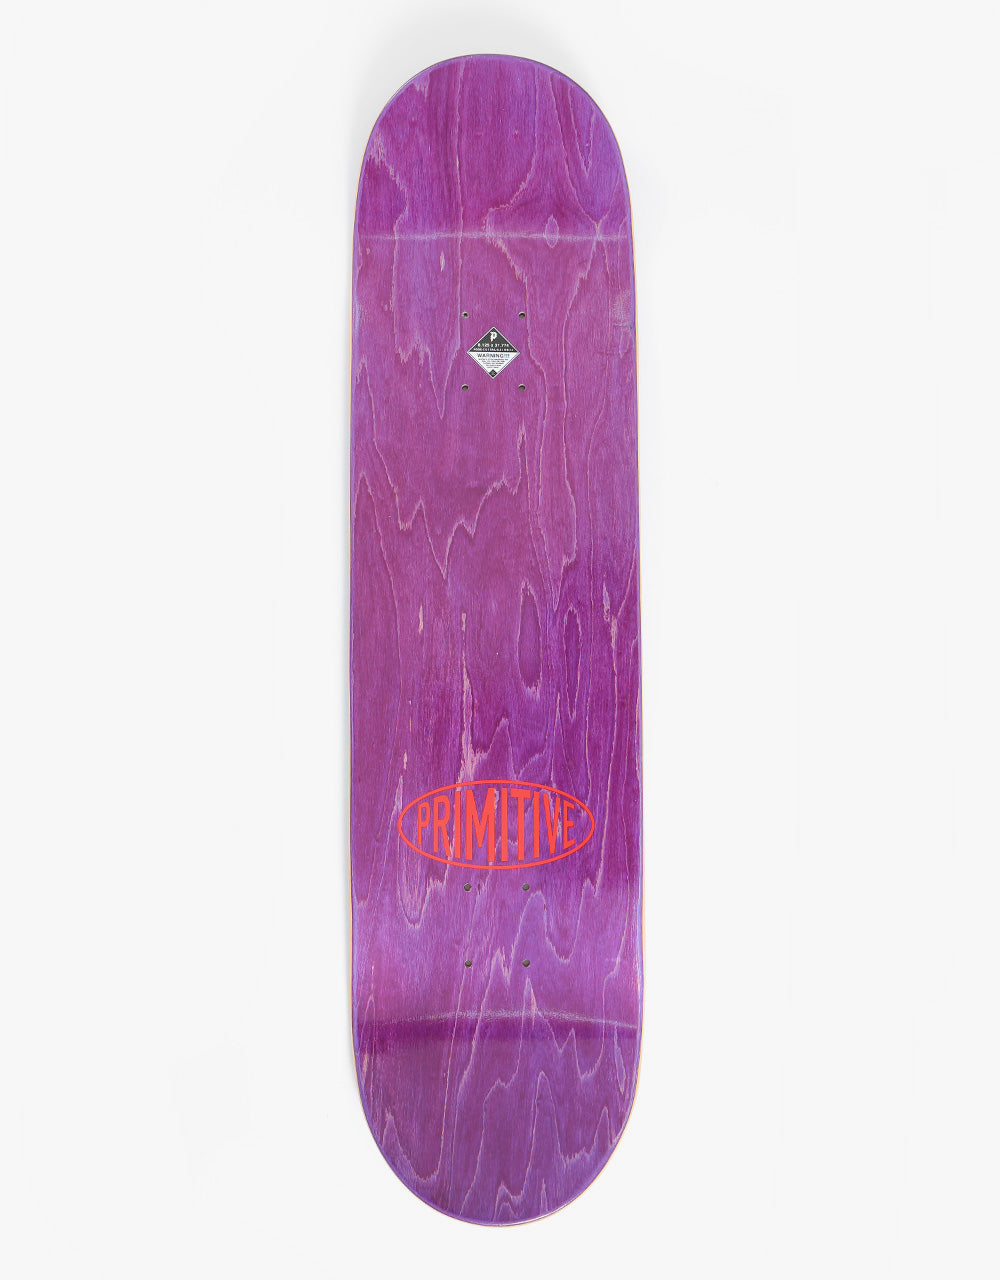 Primitive McClung Later Skateboard Deck - 8.125"